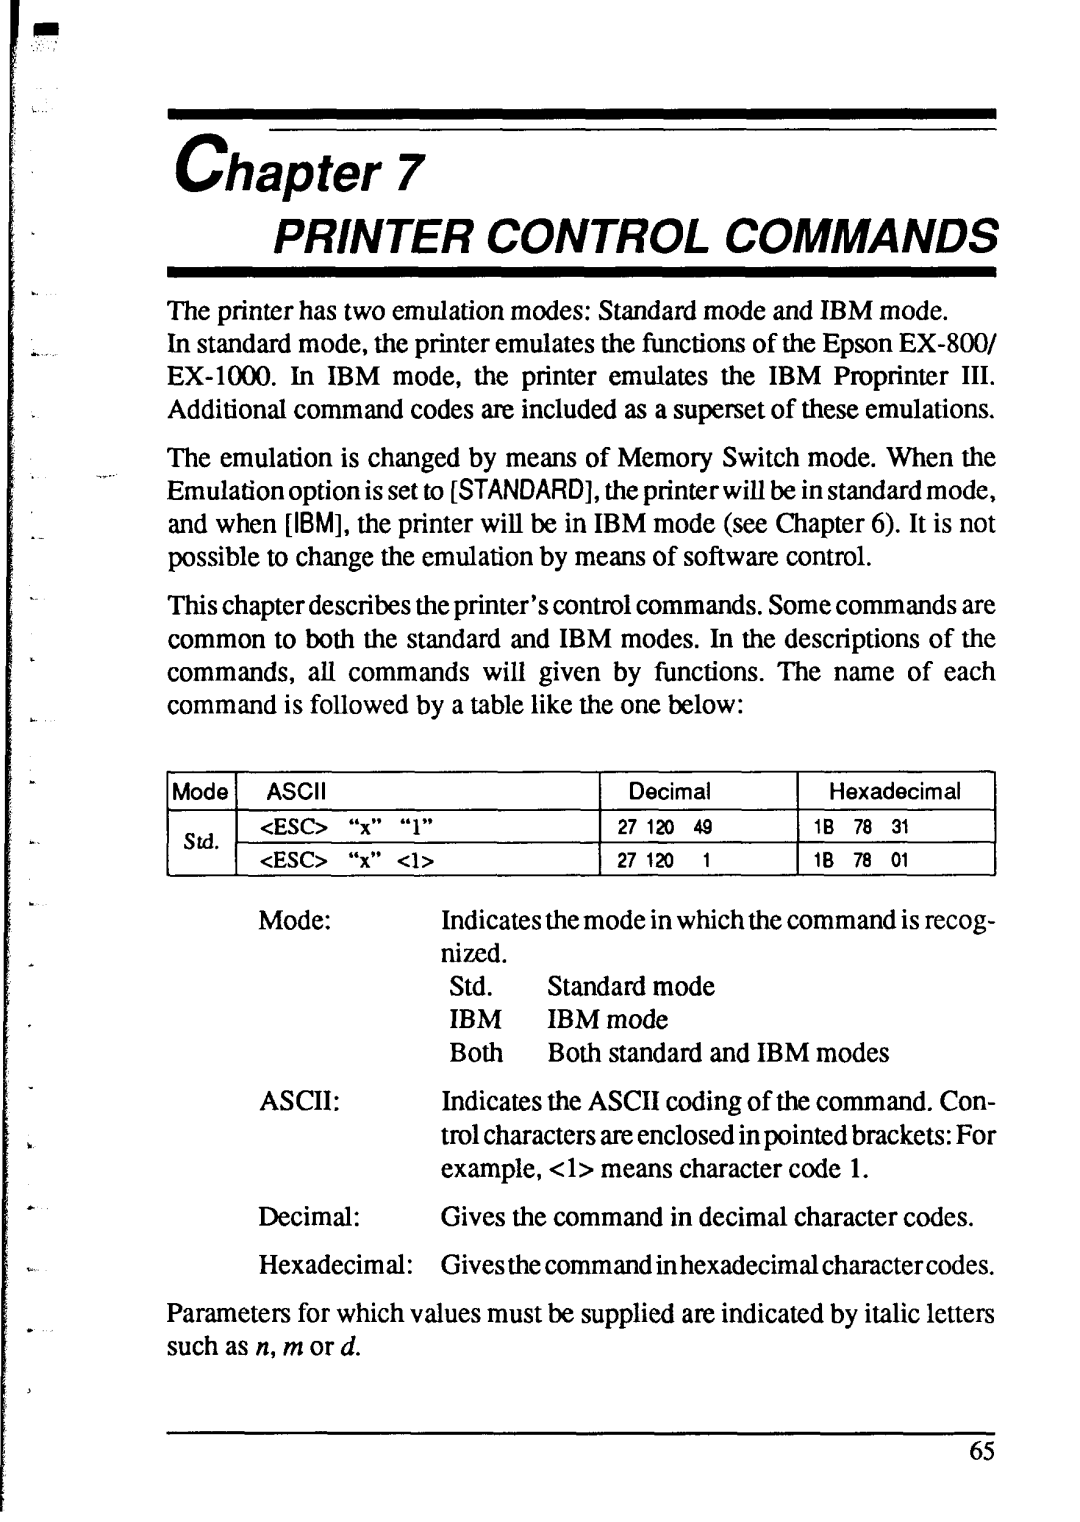 Star Micronics XR-1520, XR-1020 manual Printer Control Commands, Chapter 